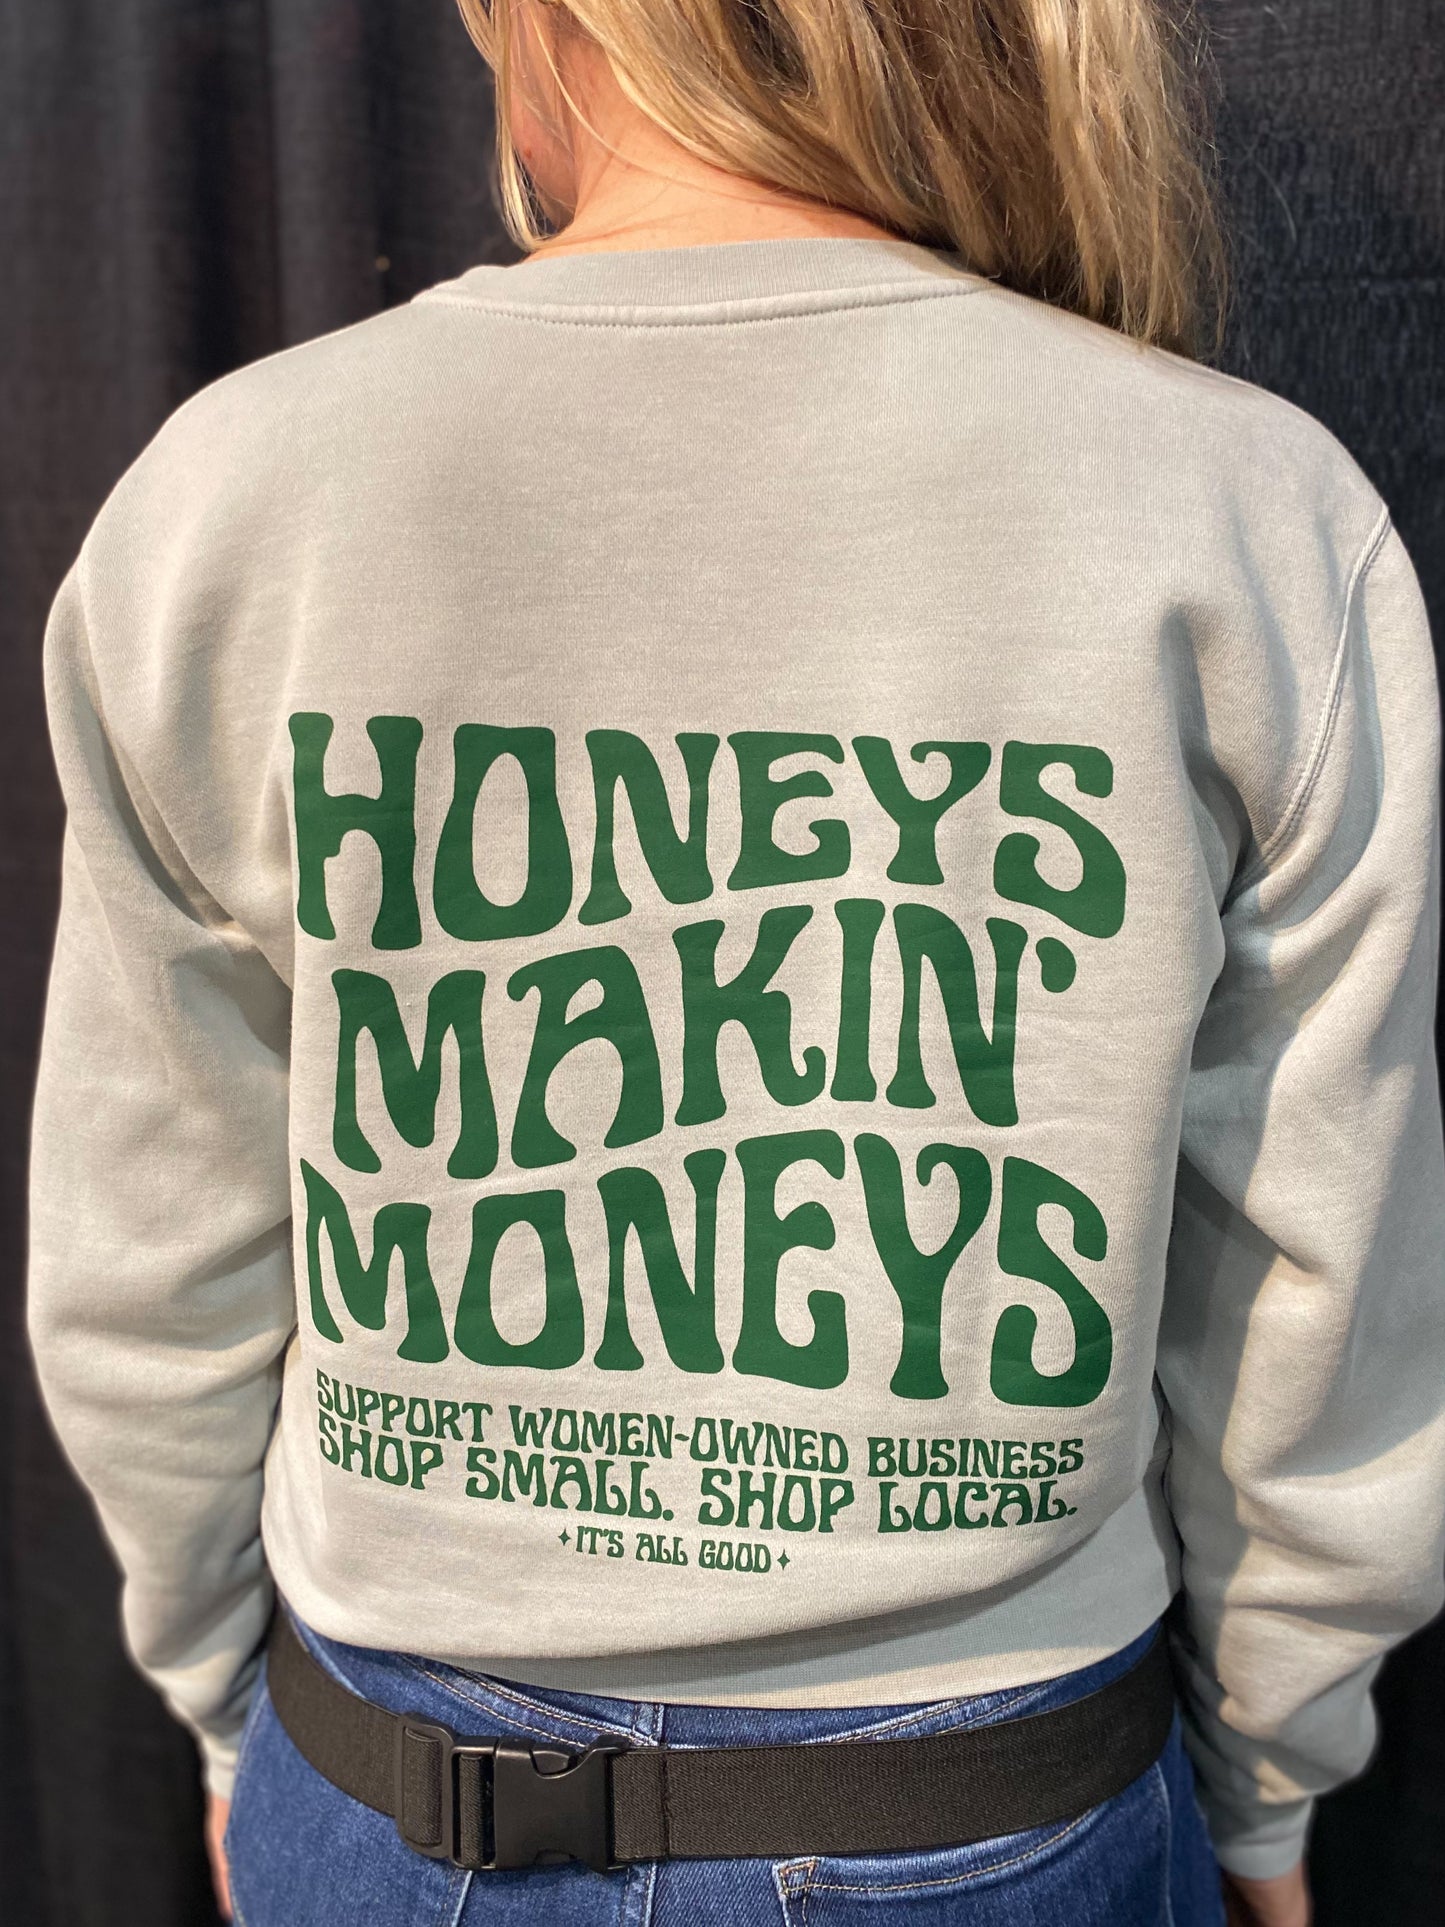 Honeys Makin' Moneys - Small Business Crewneck